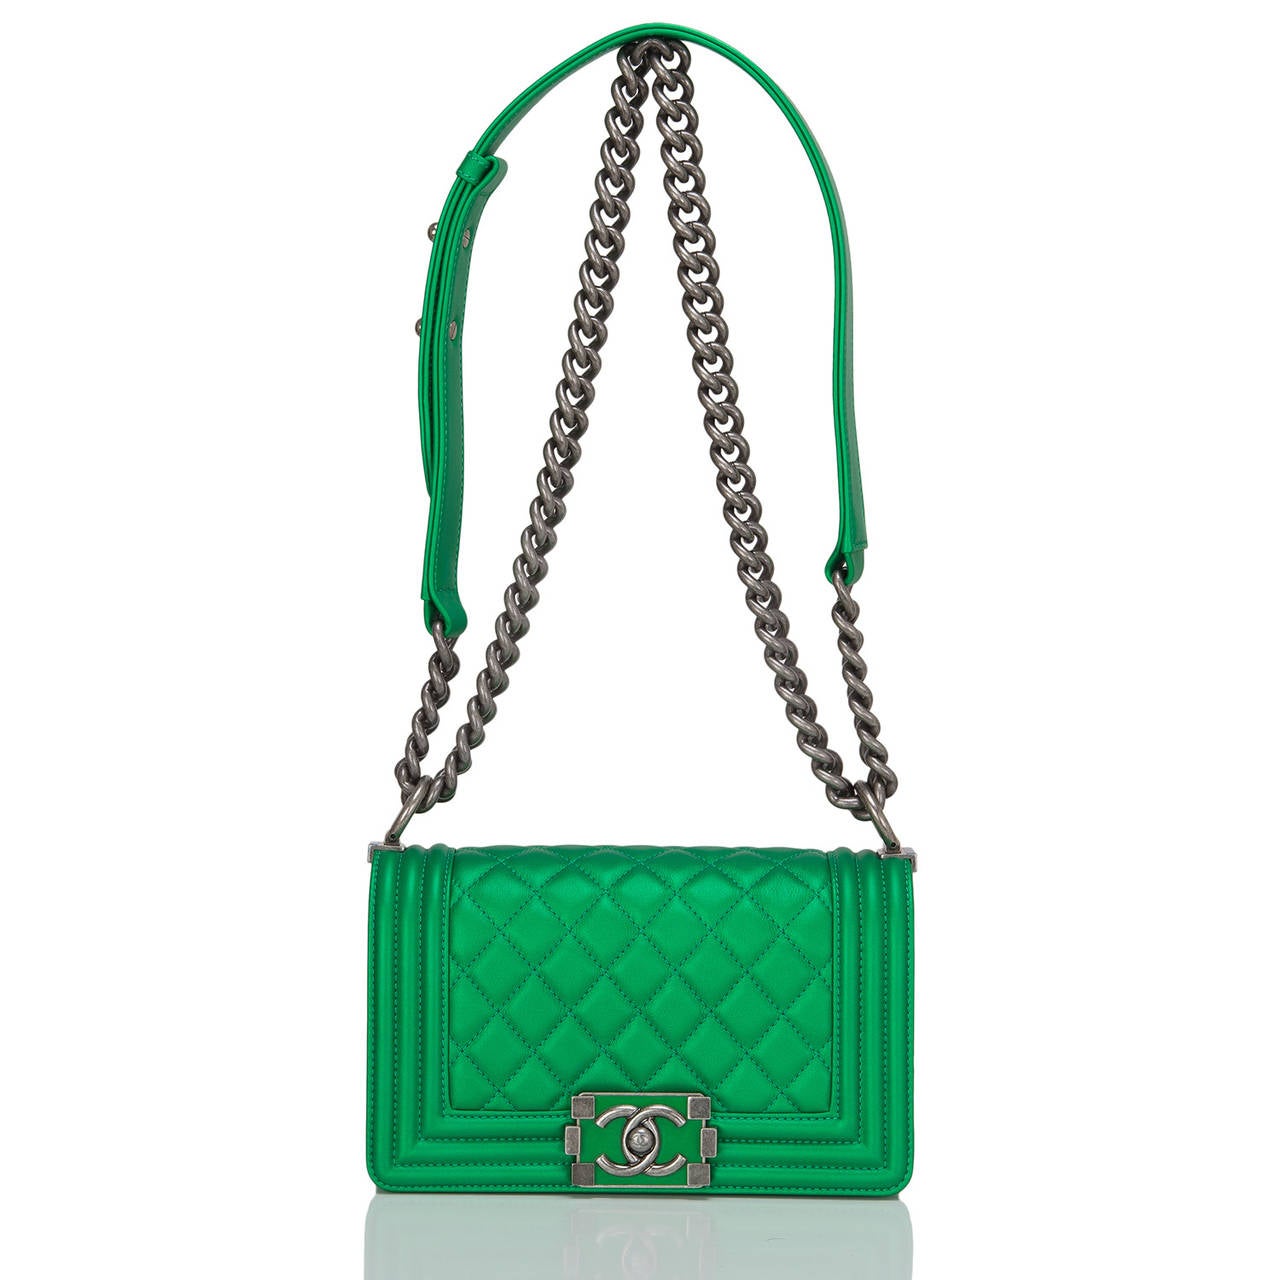 Chanel Green Metallized Calfskin Small Boy Bag 1